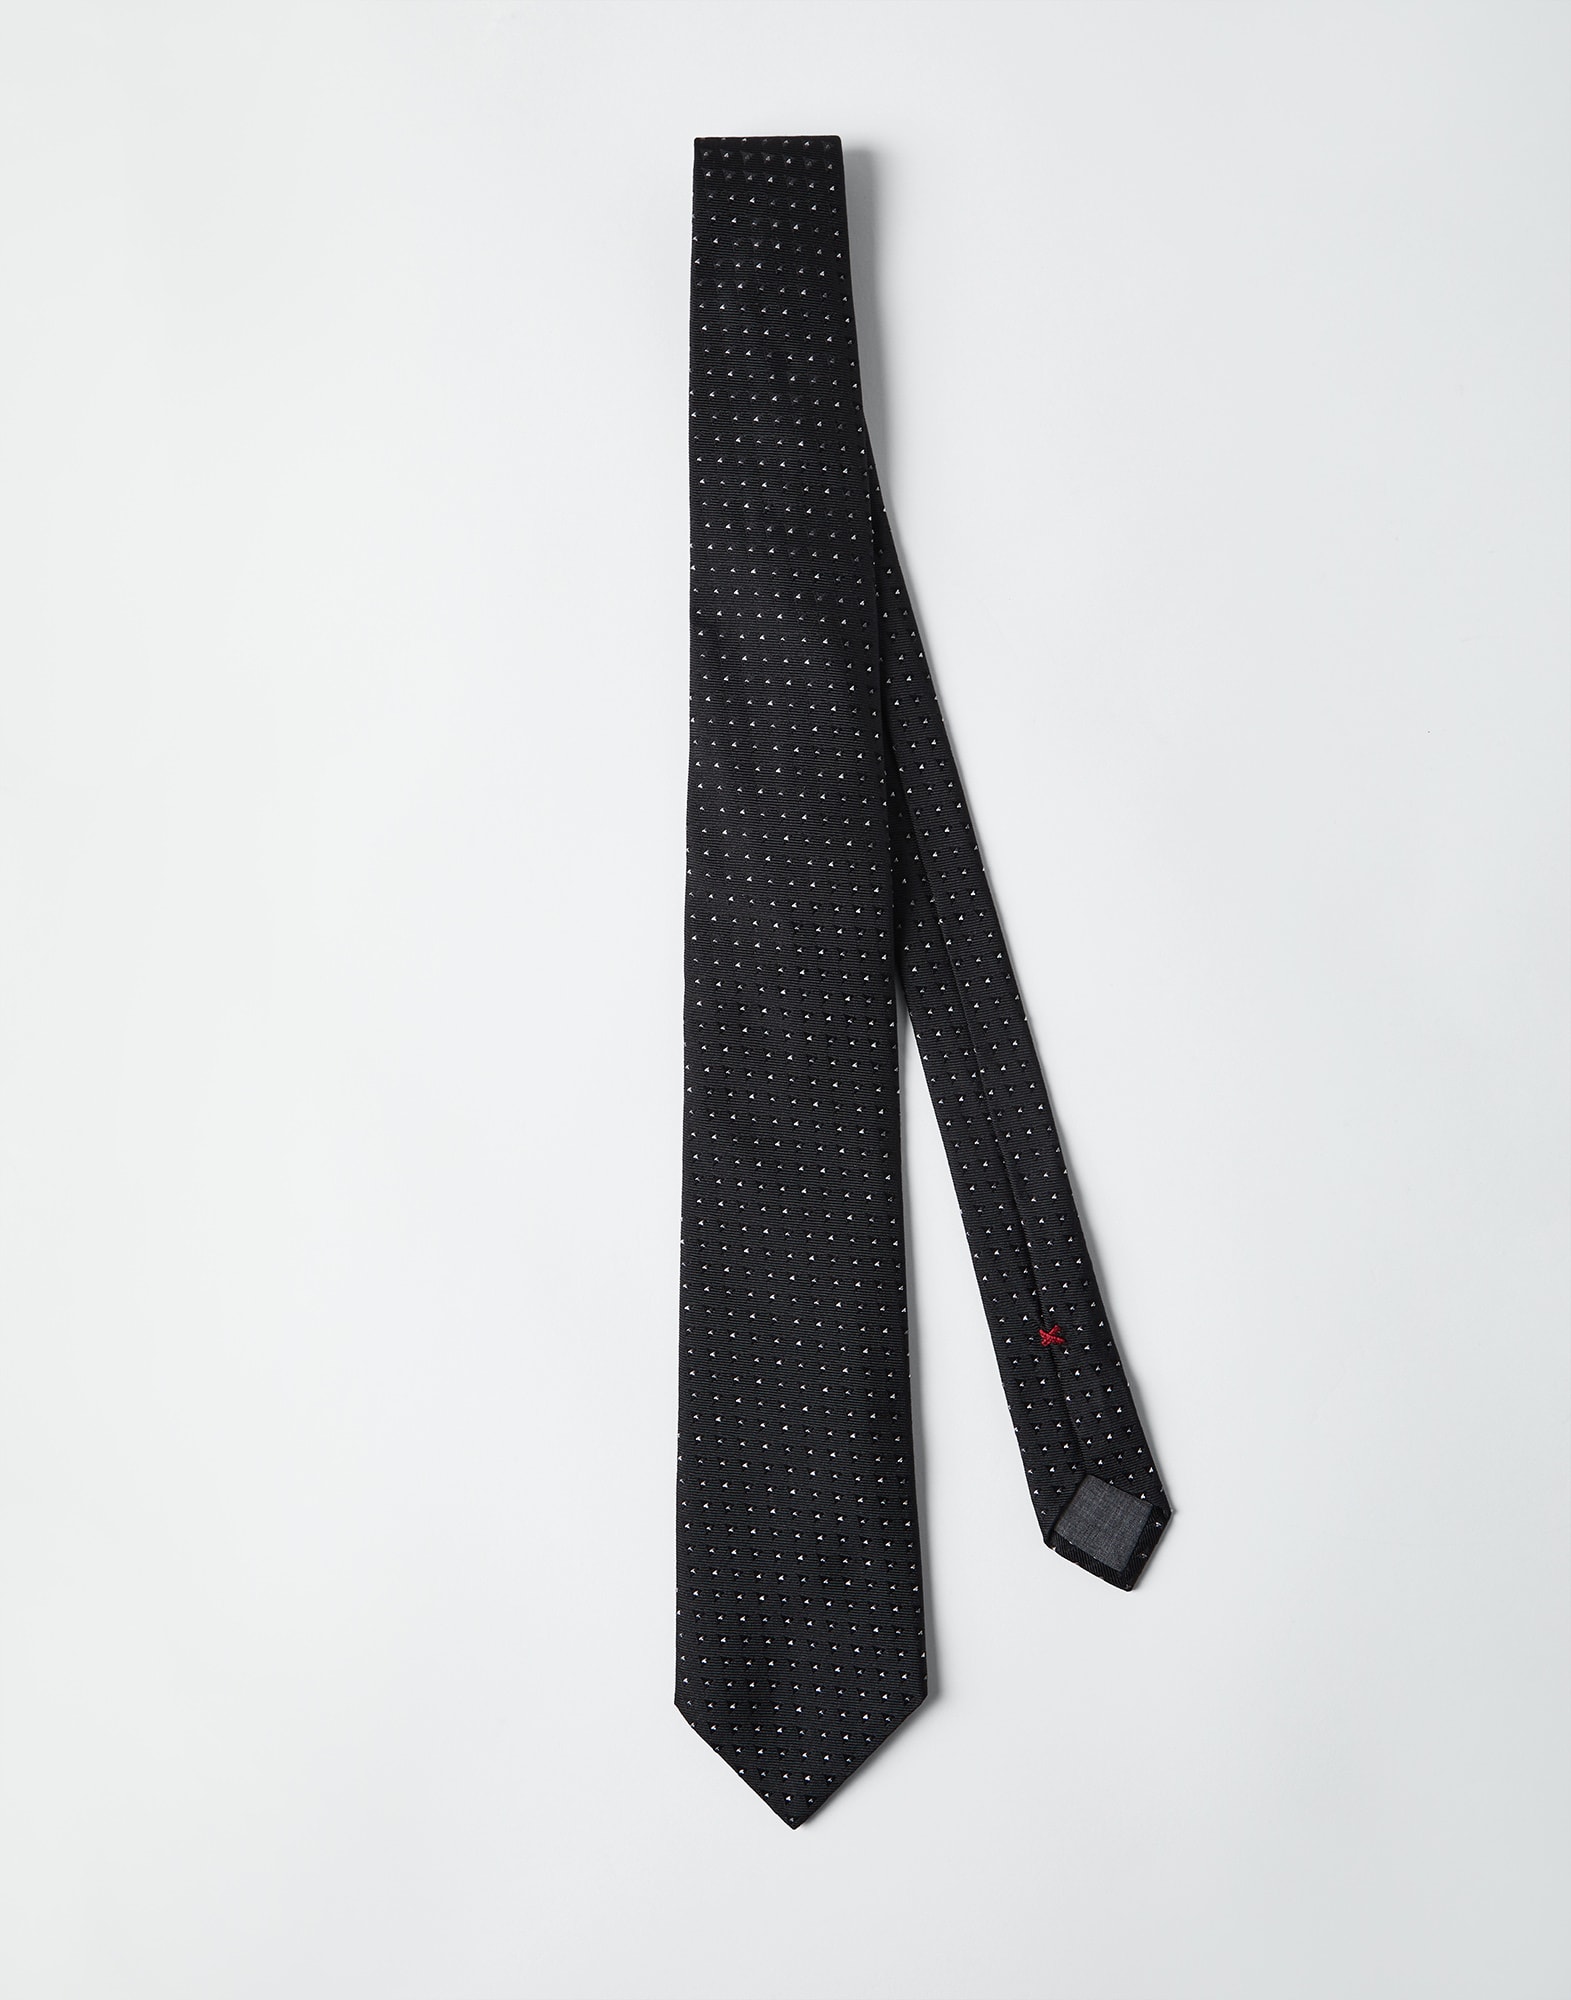 Krawatte aus Seide in Punktemuster